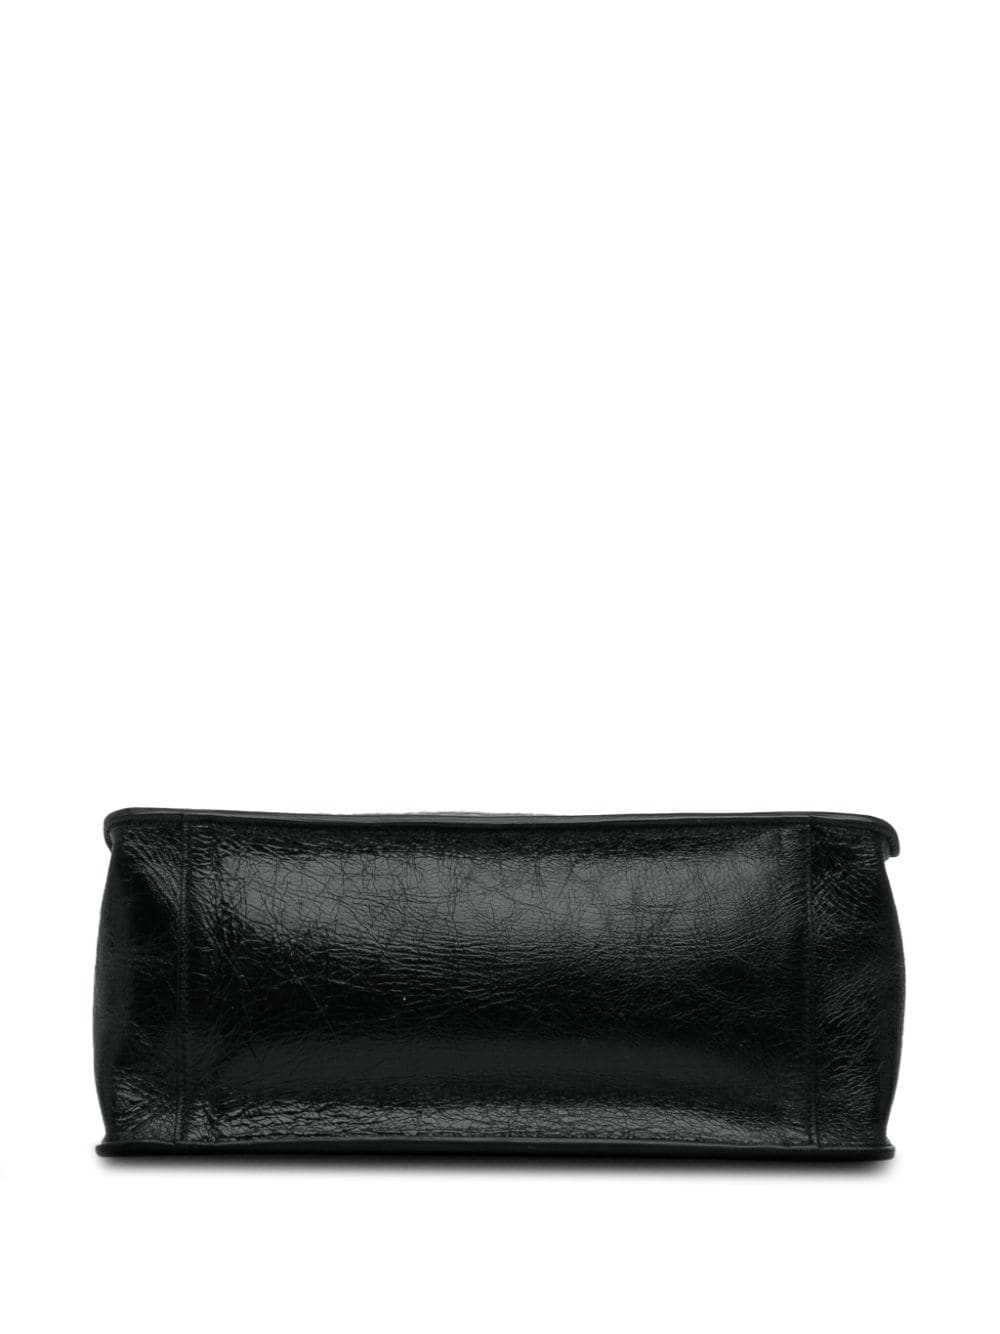 Fendi Pre-Owned 2000-2010 FF Flip satchel - Black - image 5